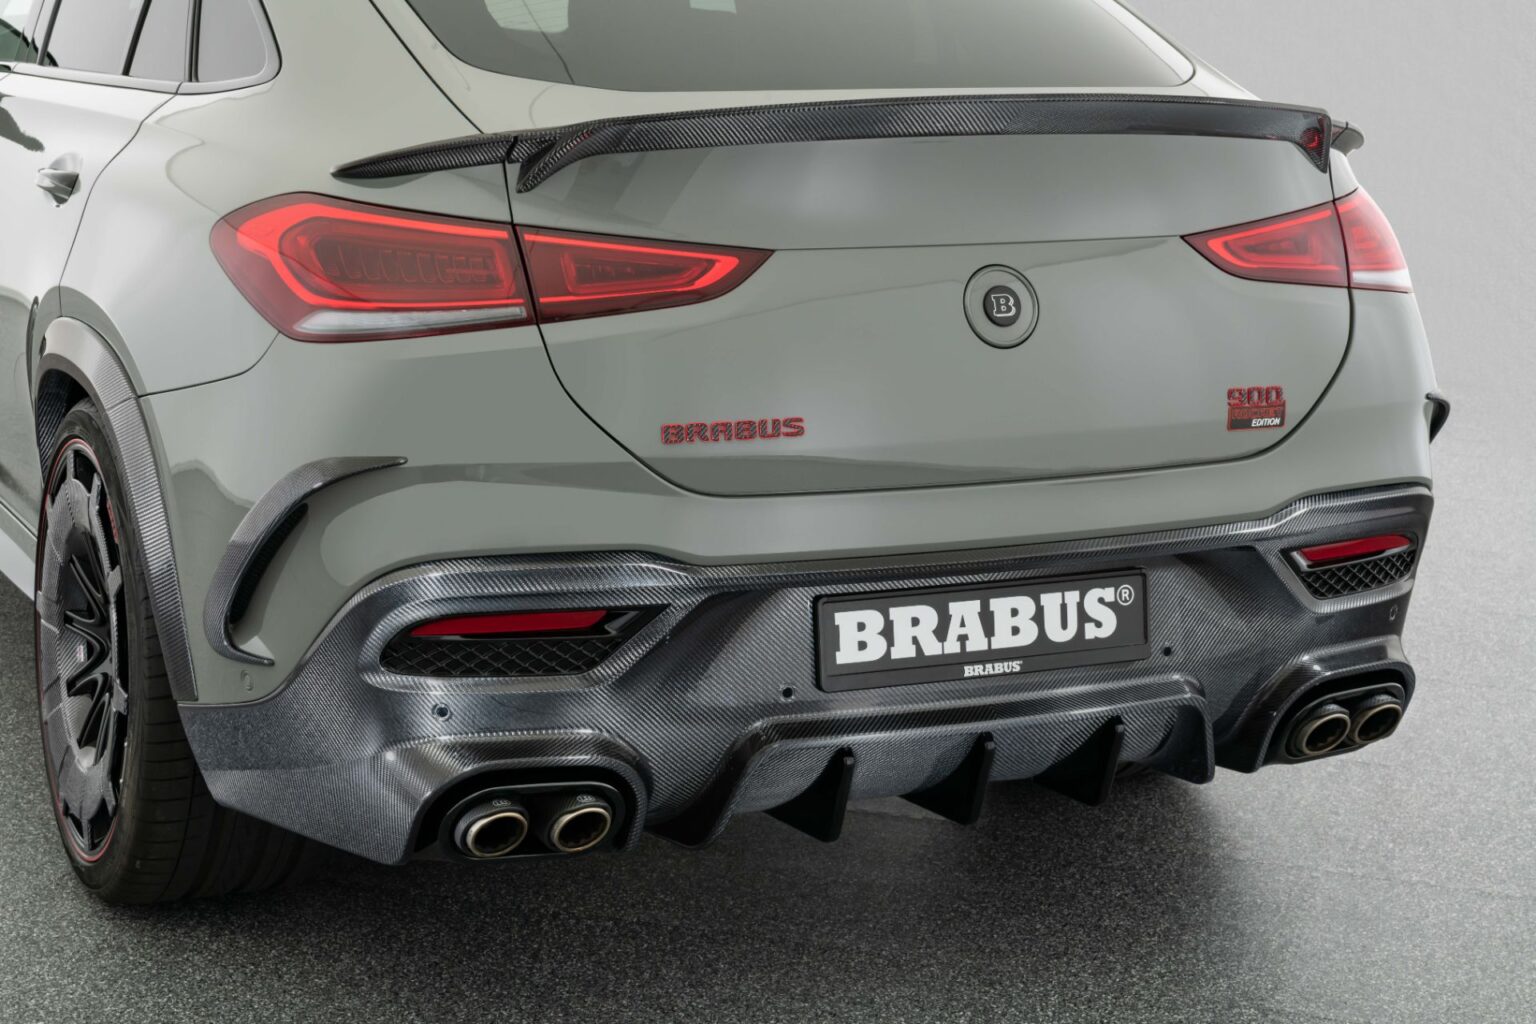 BRABUS-900-ROCKET-EDITION-Mercedes-AMG-GLE-Coupe-6-1536x1024.jpg